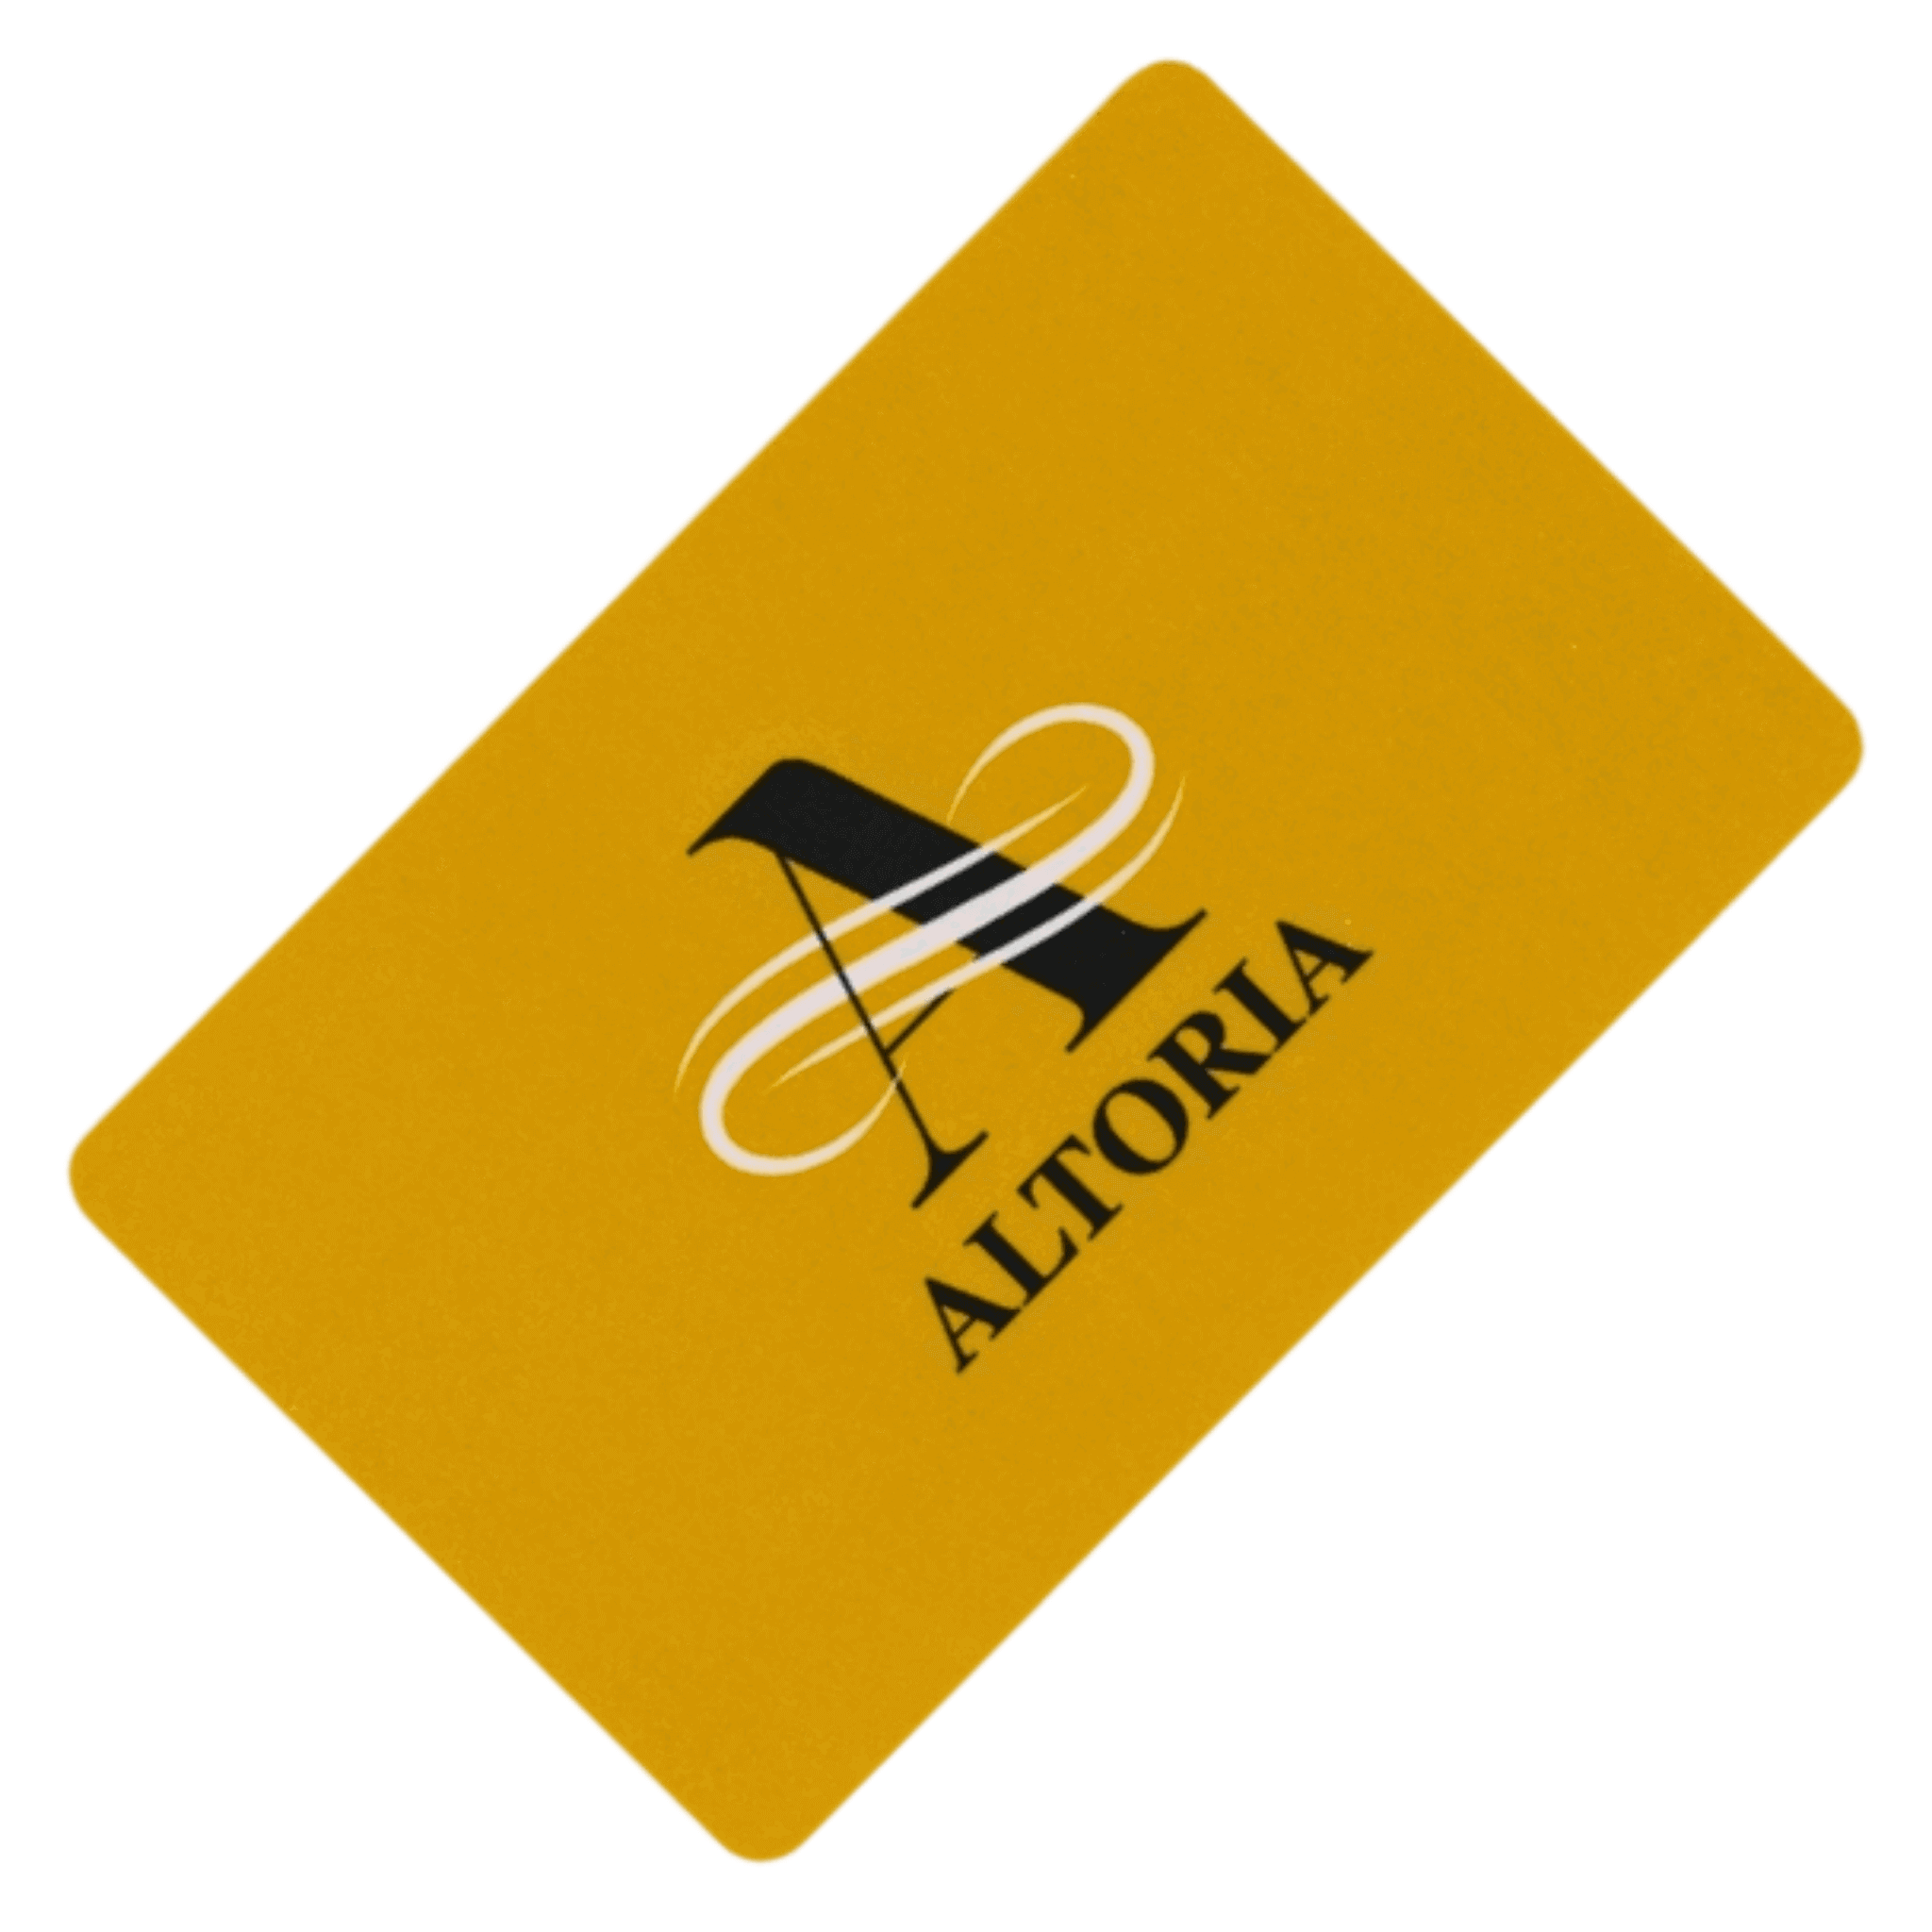 20% Recycled Card Custom Printed for Altoria